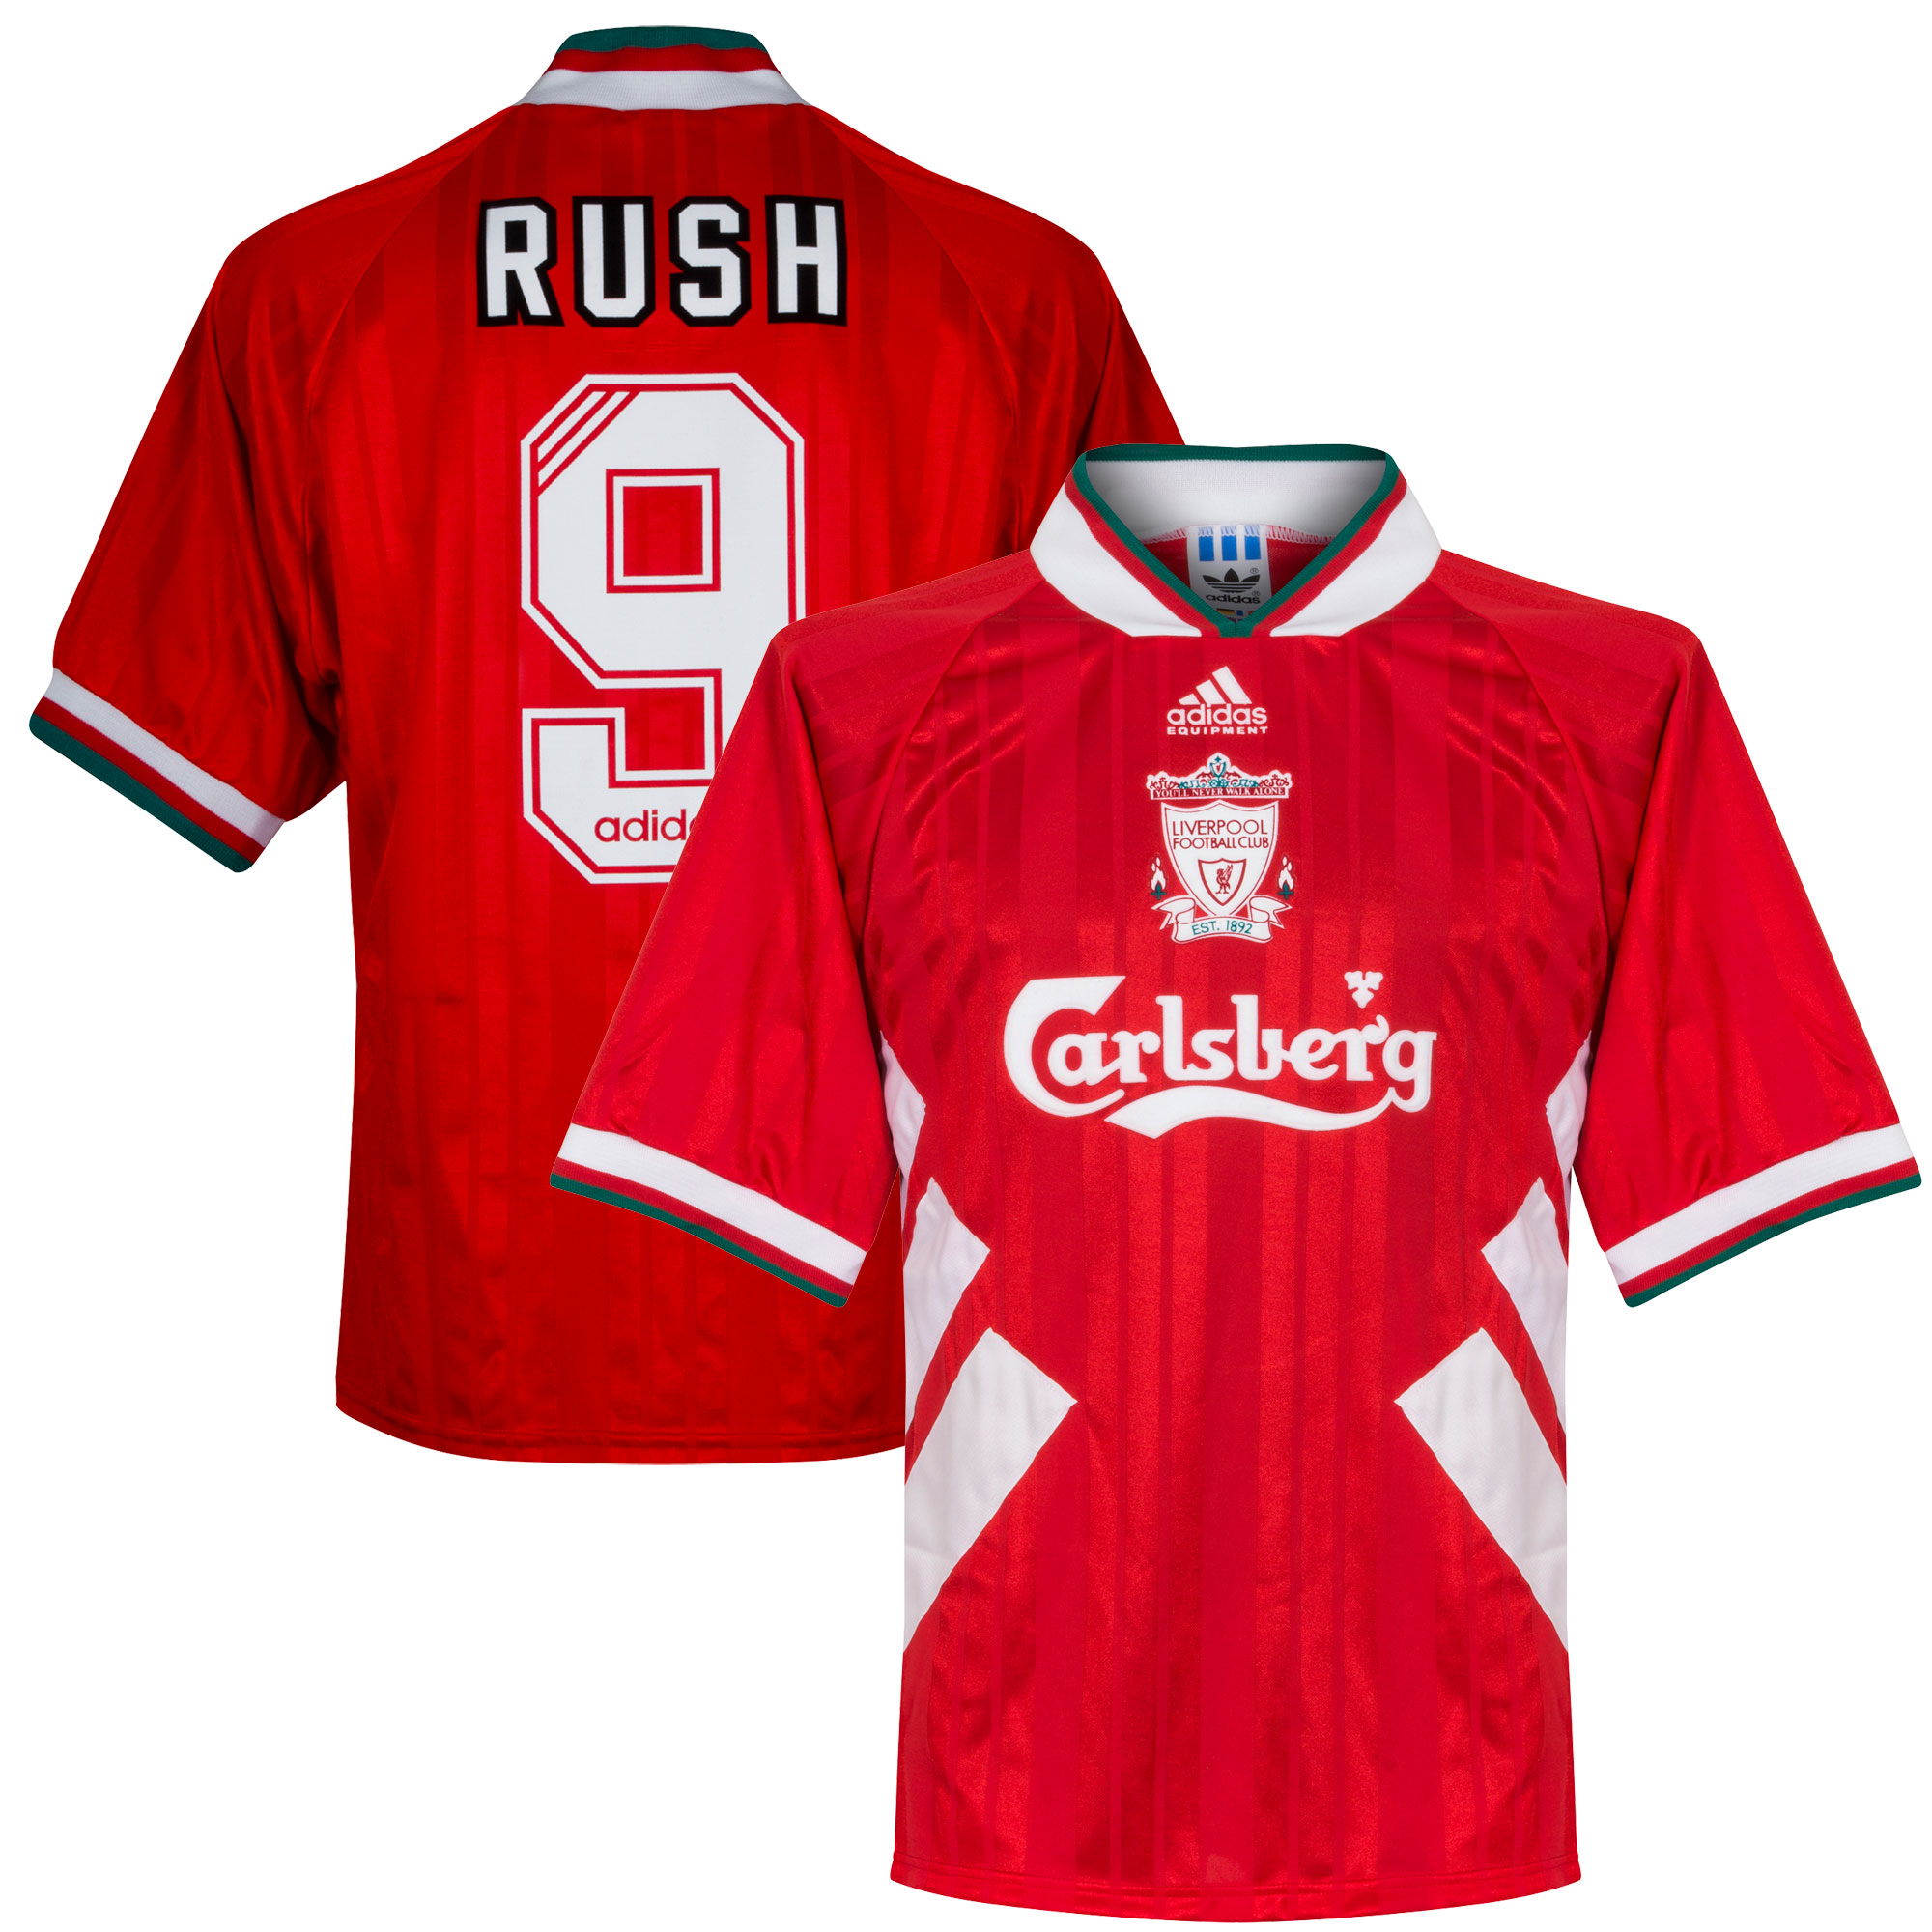 adidas Liverpool Shirt Thuis 1993-1995 + Rush 9 Maat XL